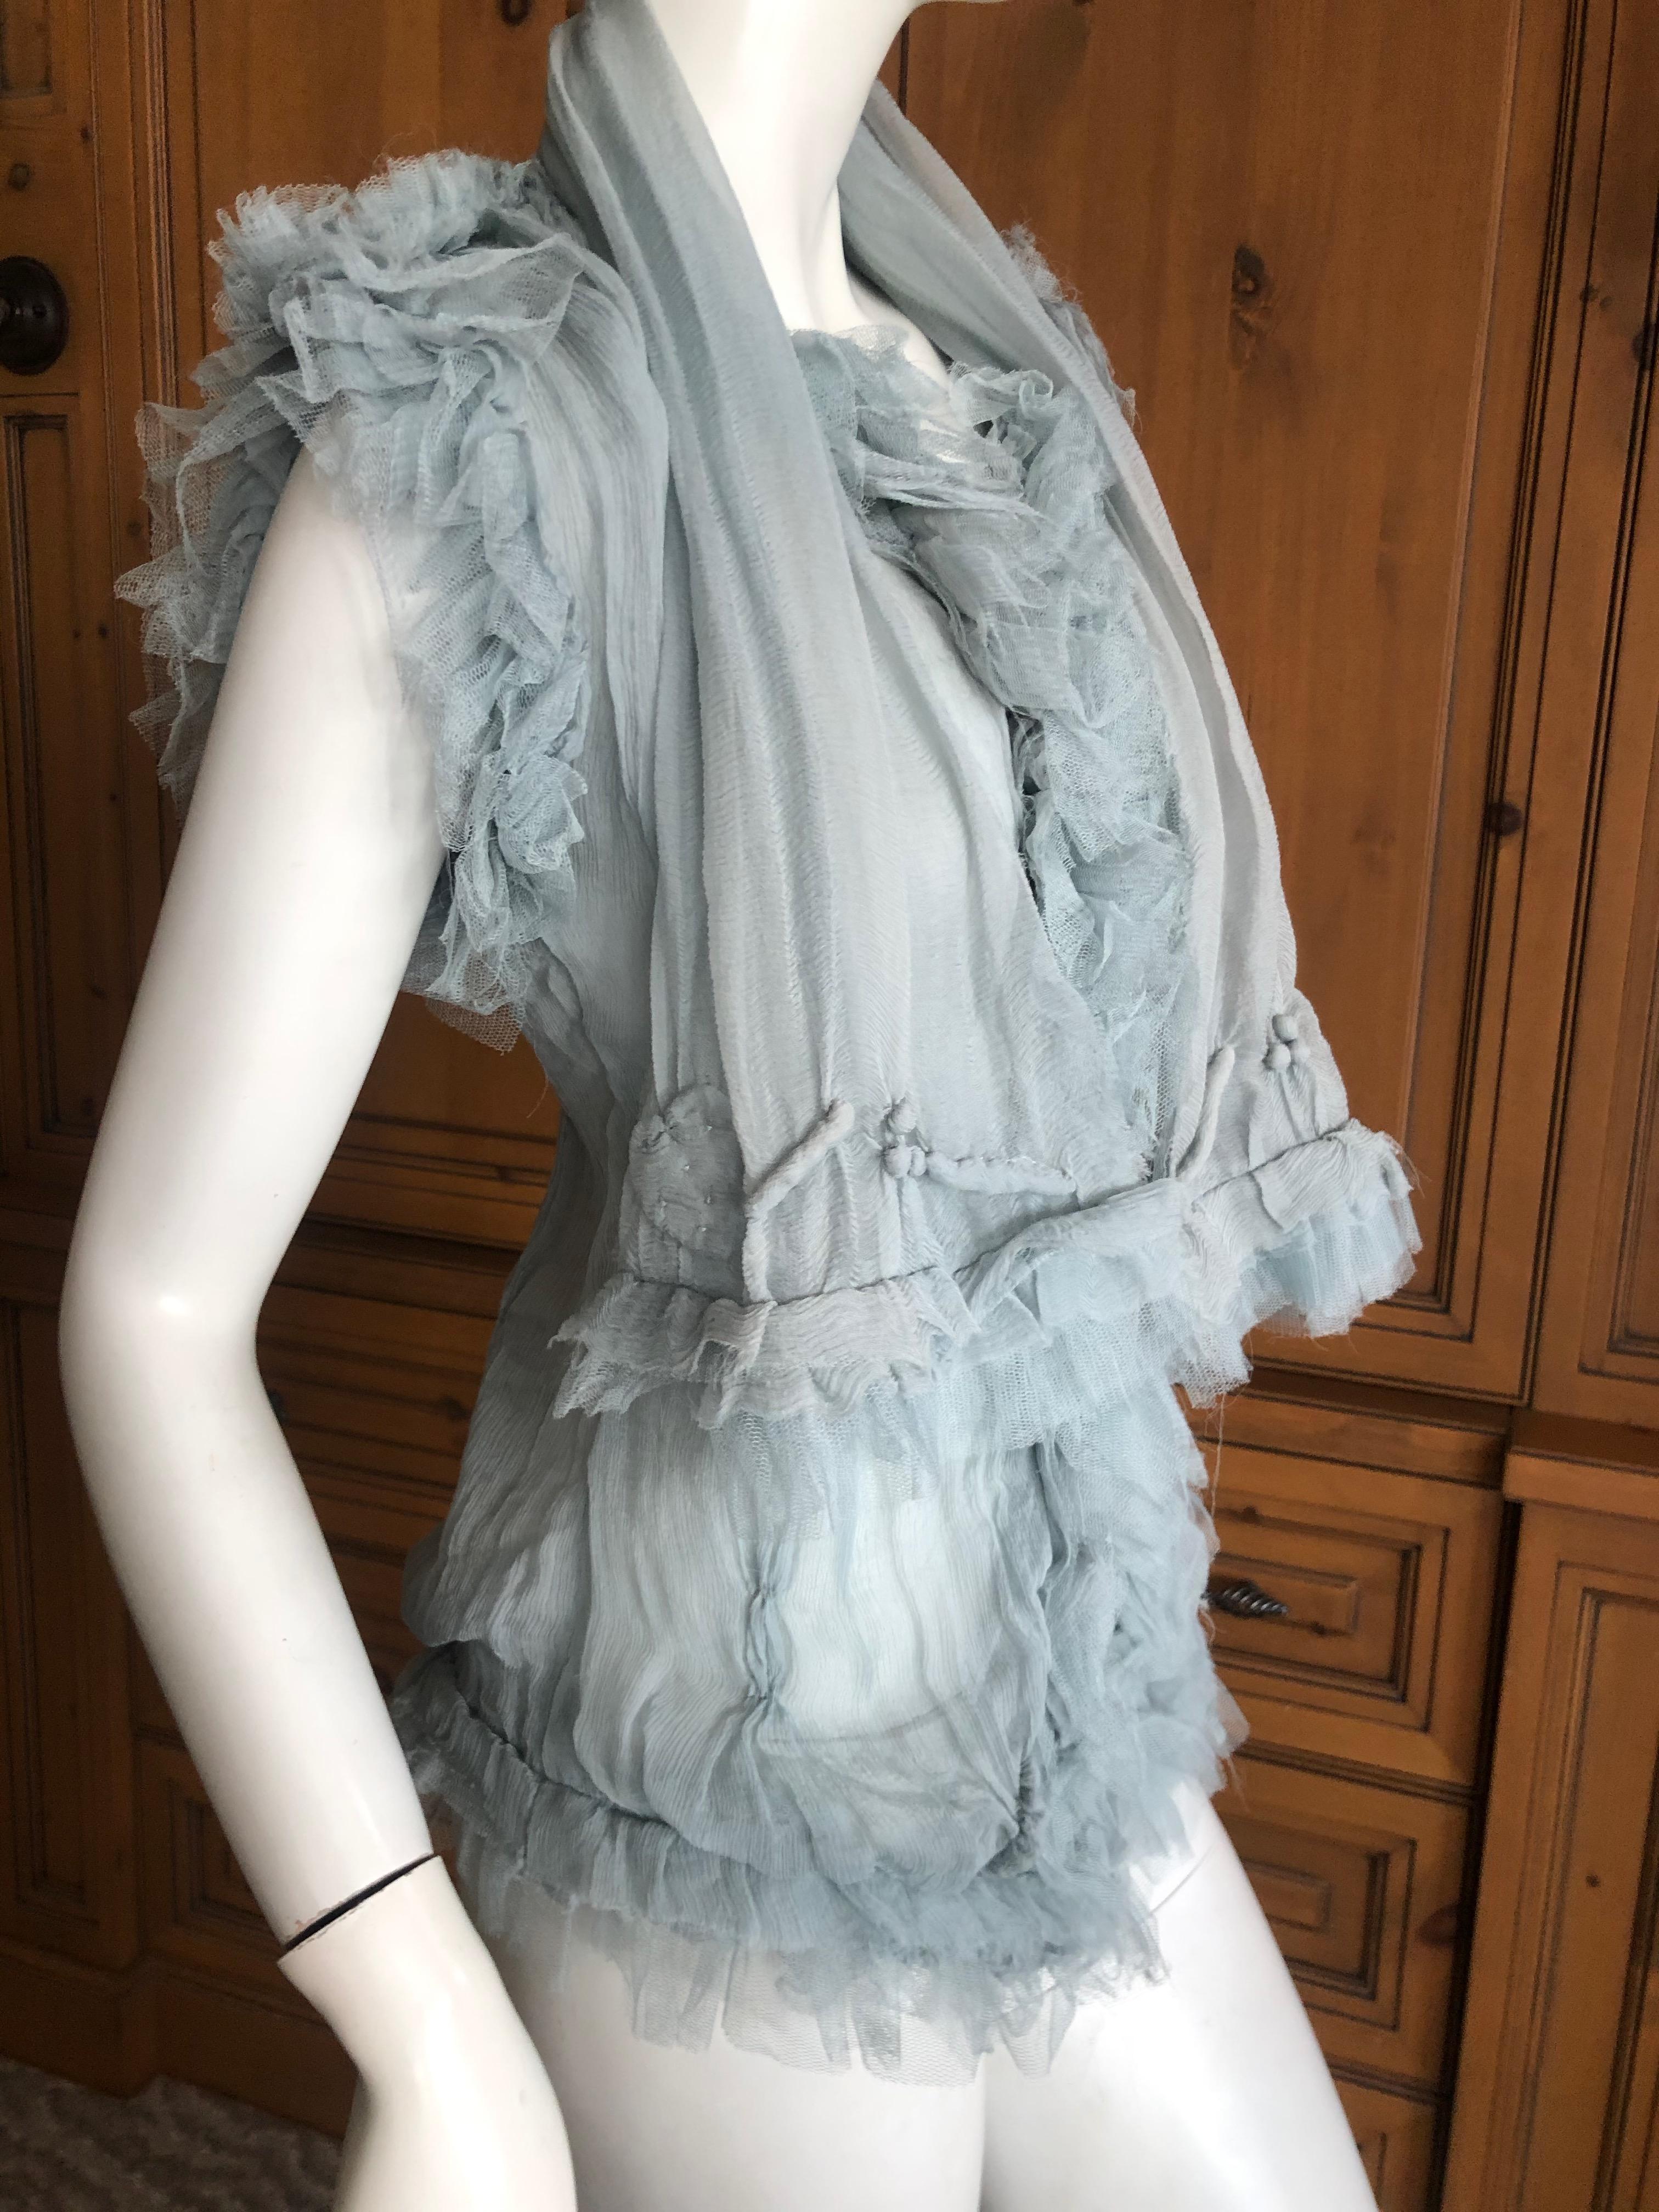 Jean Paul Gaultier Romantic Gray Vintage Silk Tulle Top
Size S (36)
Bust 35